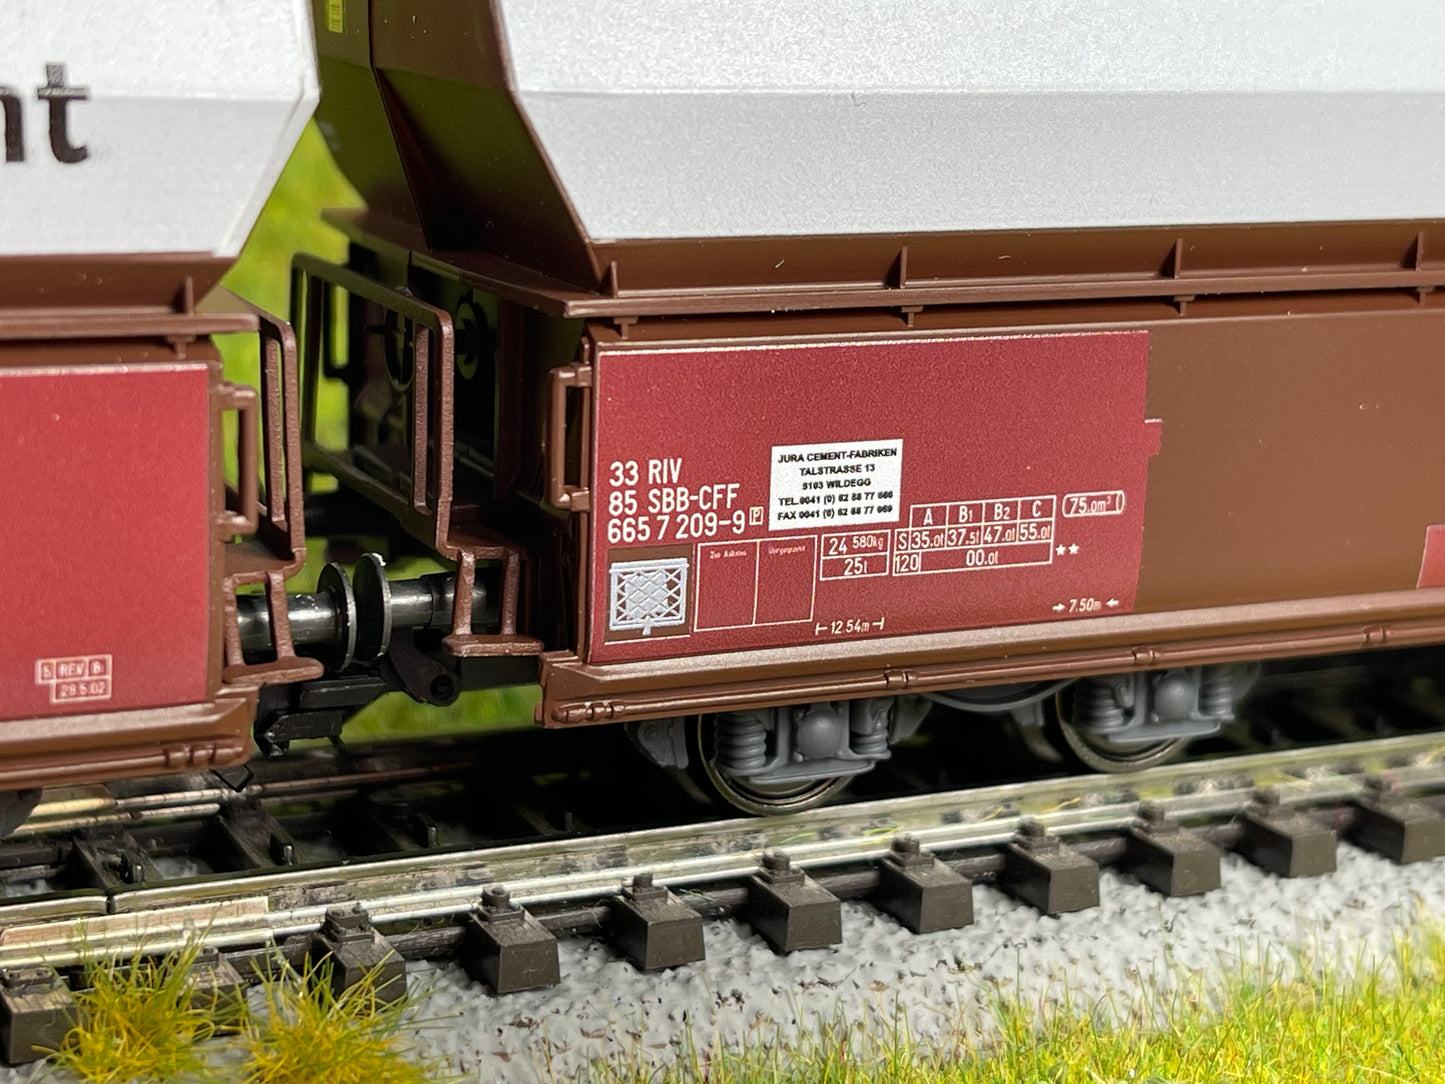 Marklin 46279 - Type Fals Freight Car Set